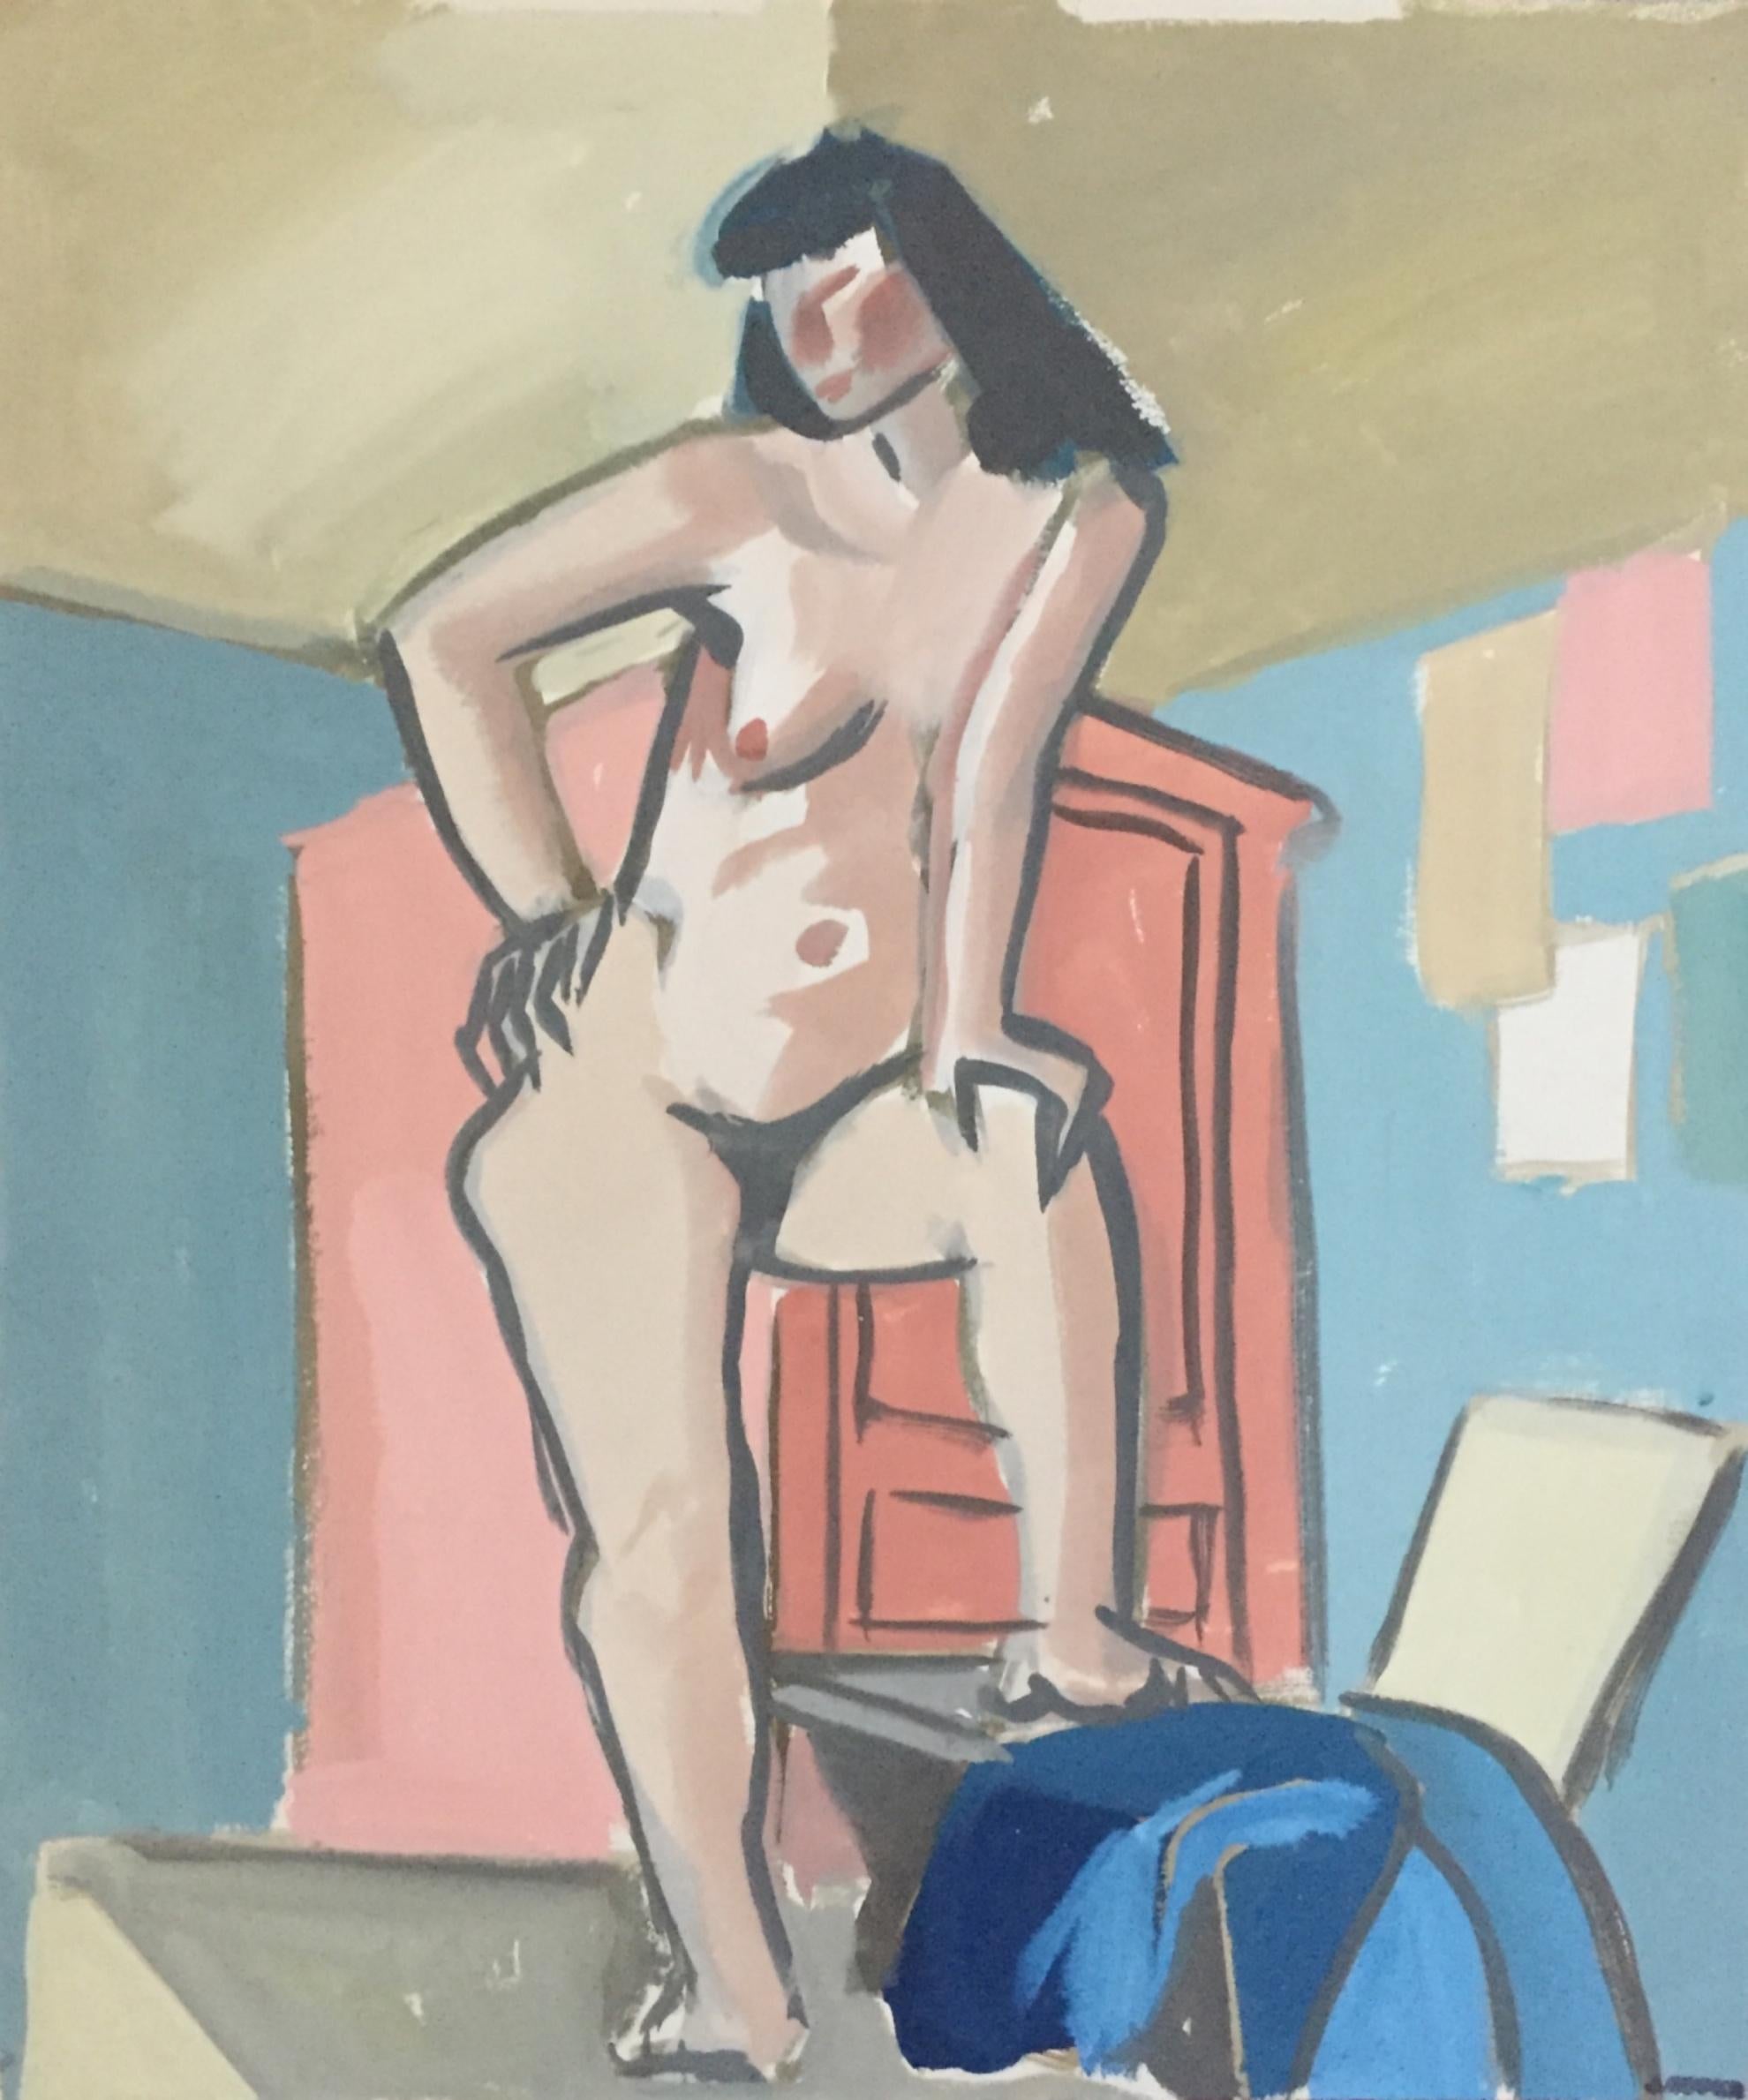 1950s "Short Bangs" Mid Century Nude Gouache Painting